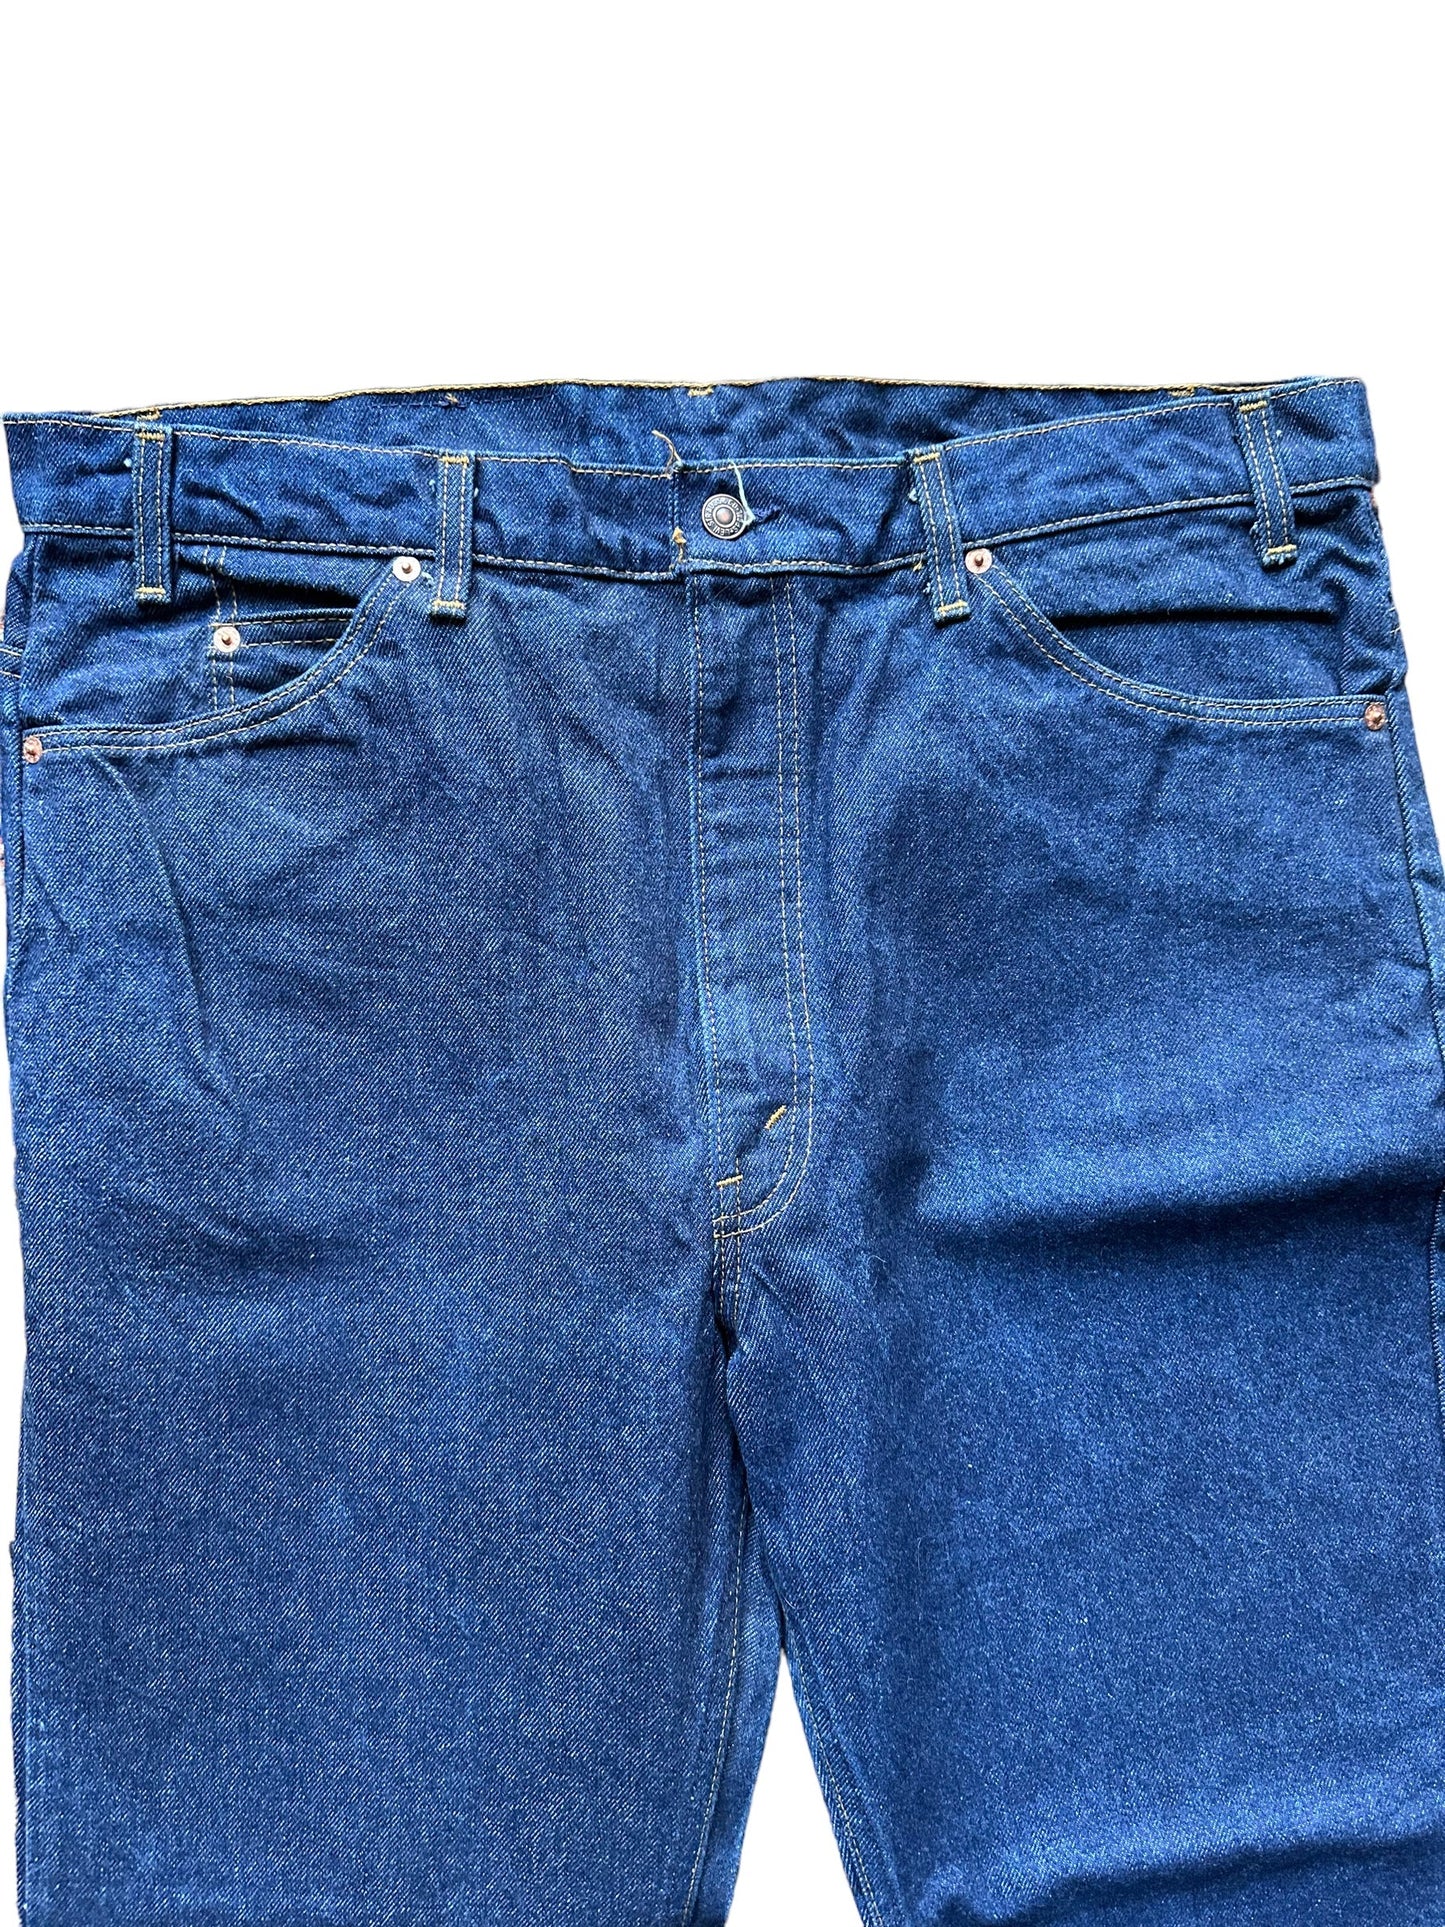 Front waist view of Deadstock 90s USA Levi's 501 Black Jeans 26x33 | Seattle Deadstock Vintage Jeans | Barn Owl Vintage Denim